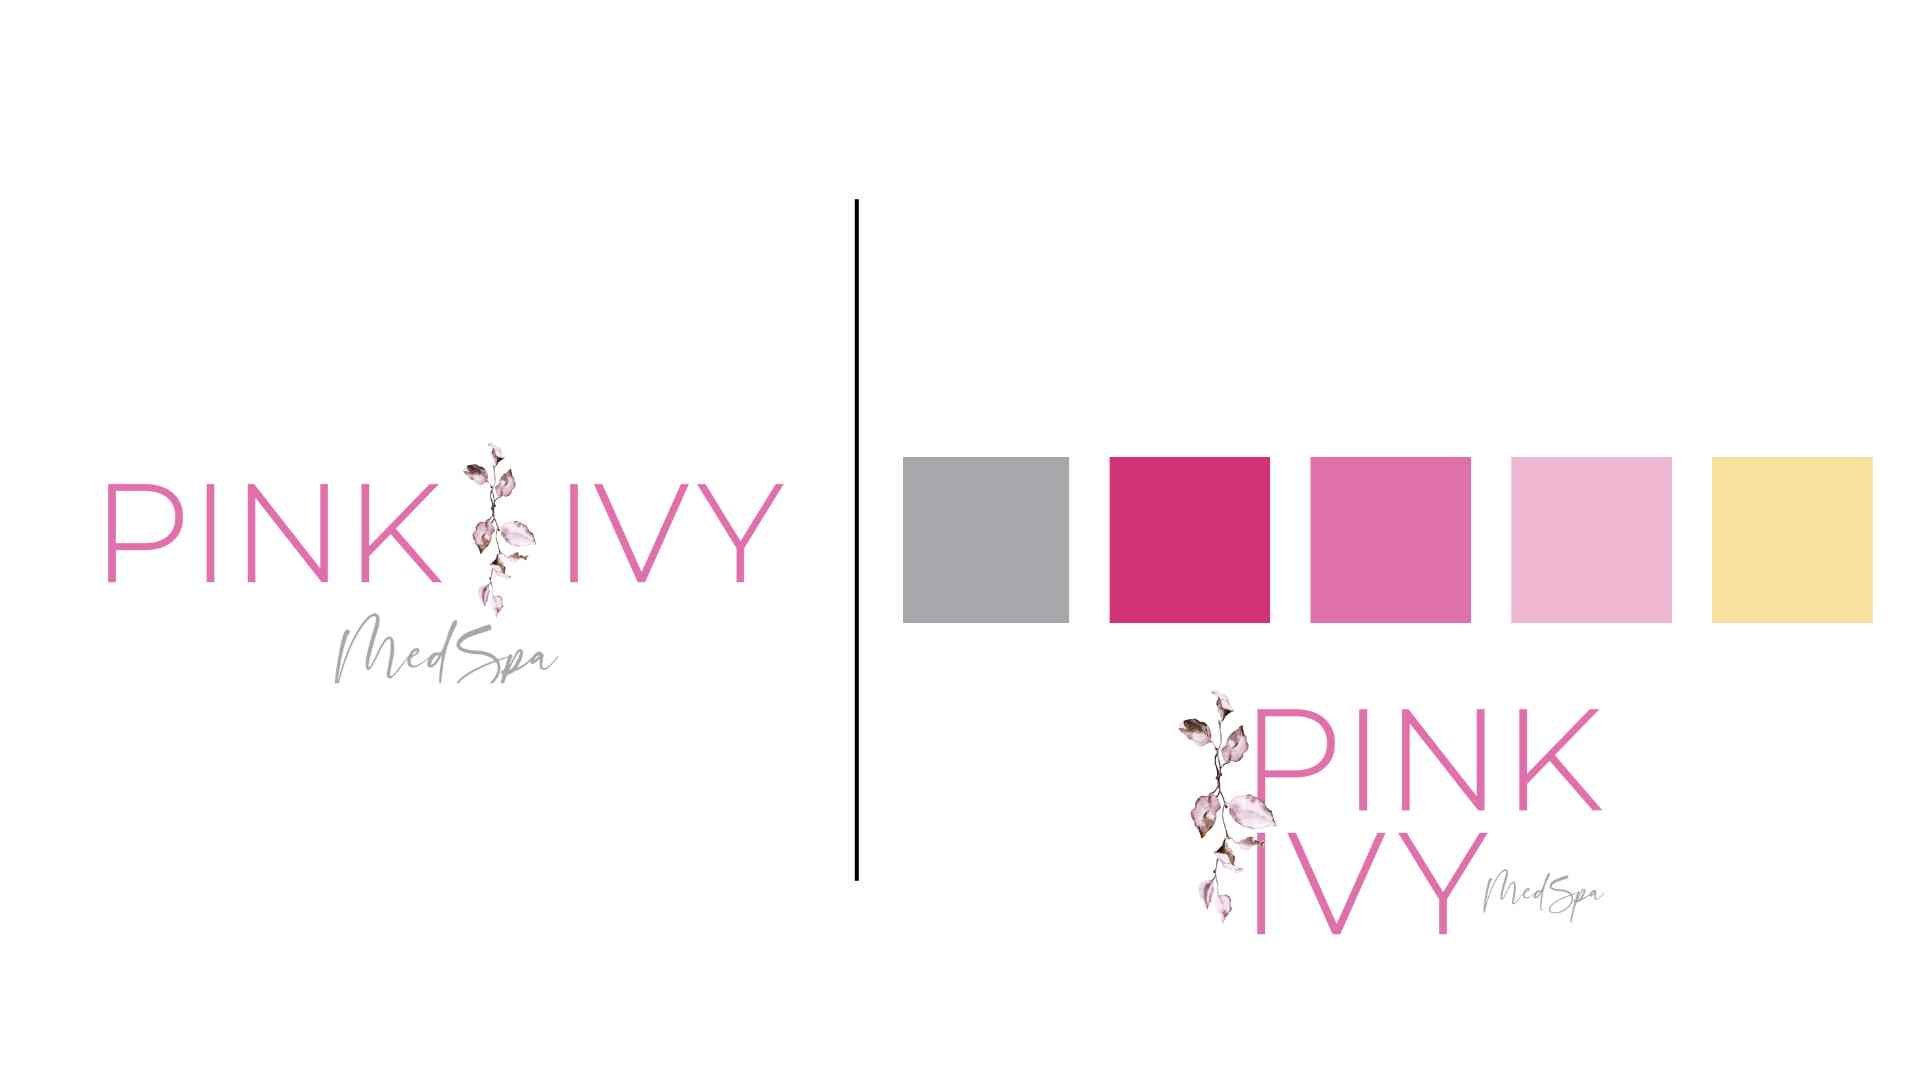 Pink Ivy Brand Standards